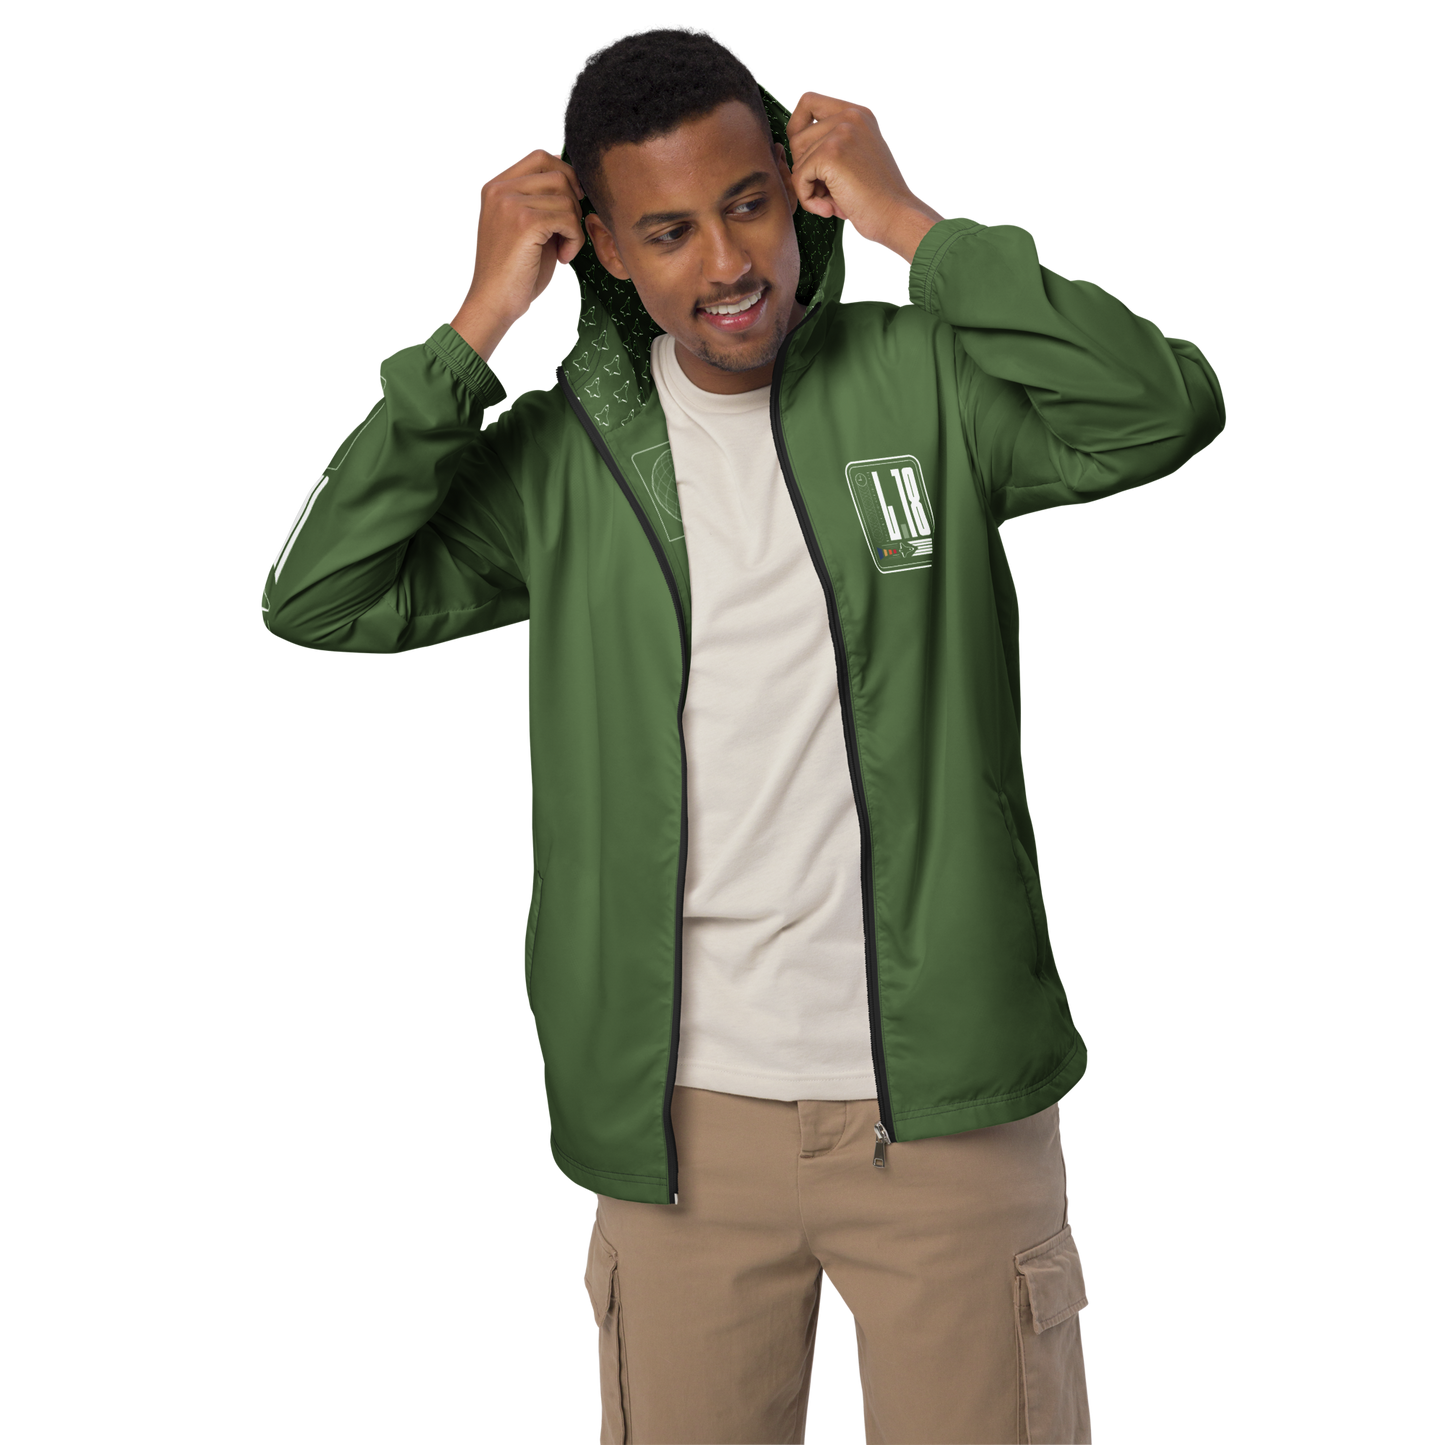 YSUG Astro - Windbreaker Jacket (Green)